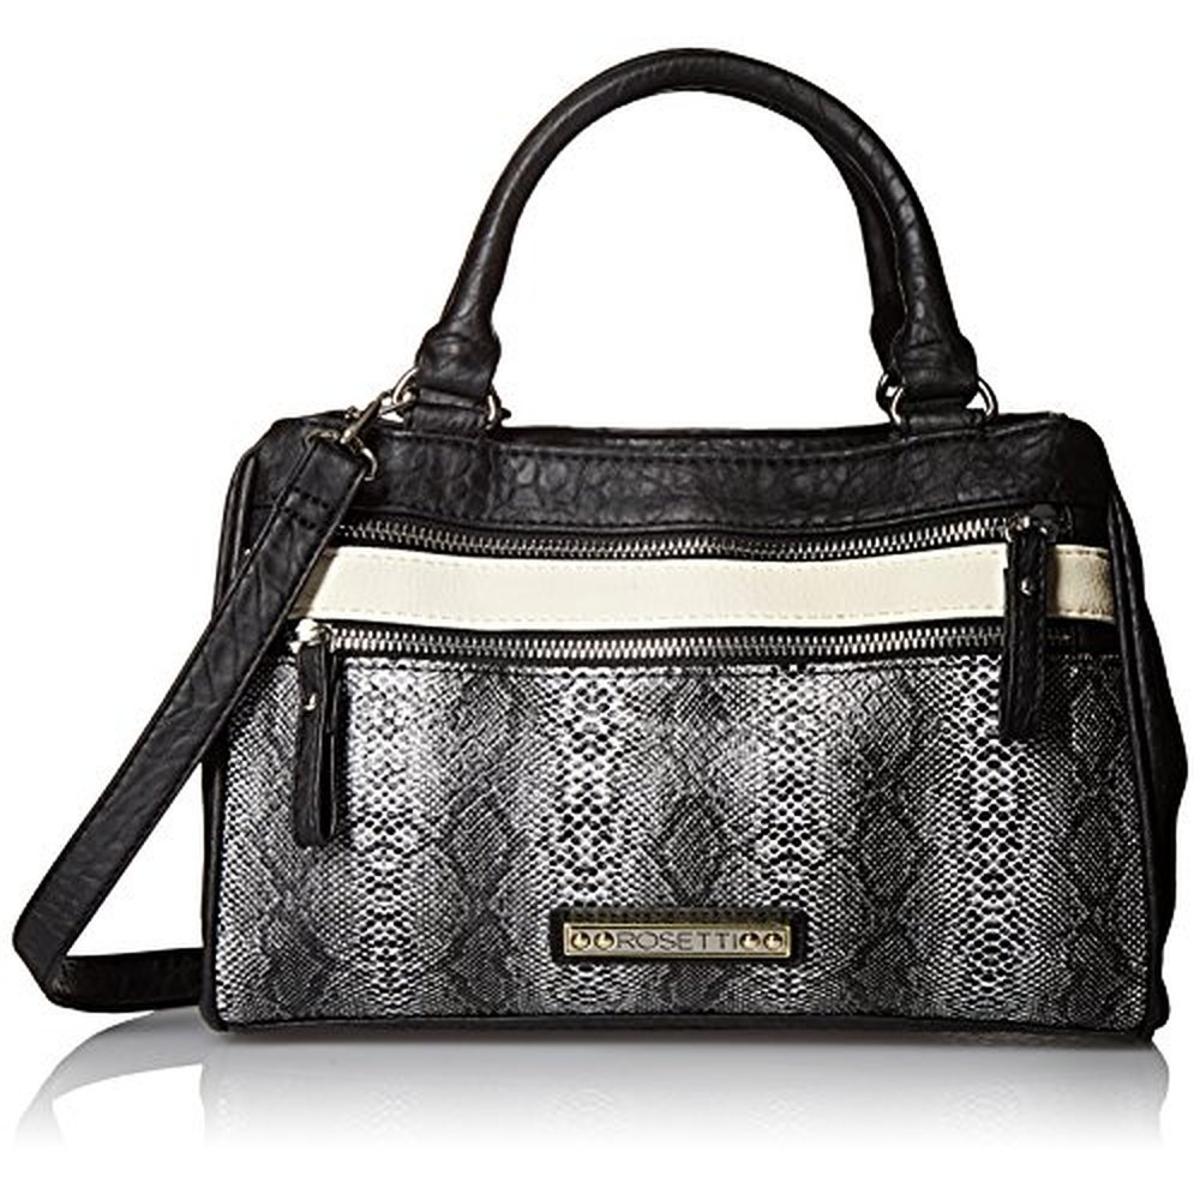 Rosetti 6373 Womens Charlotte Faux Leather Satchel Shoulder Handbag Purse BHFO | eBay